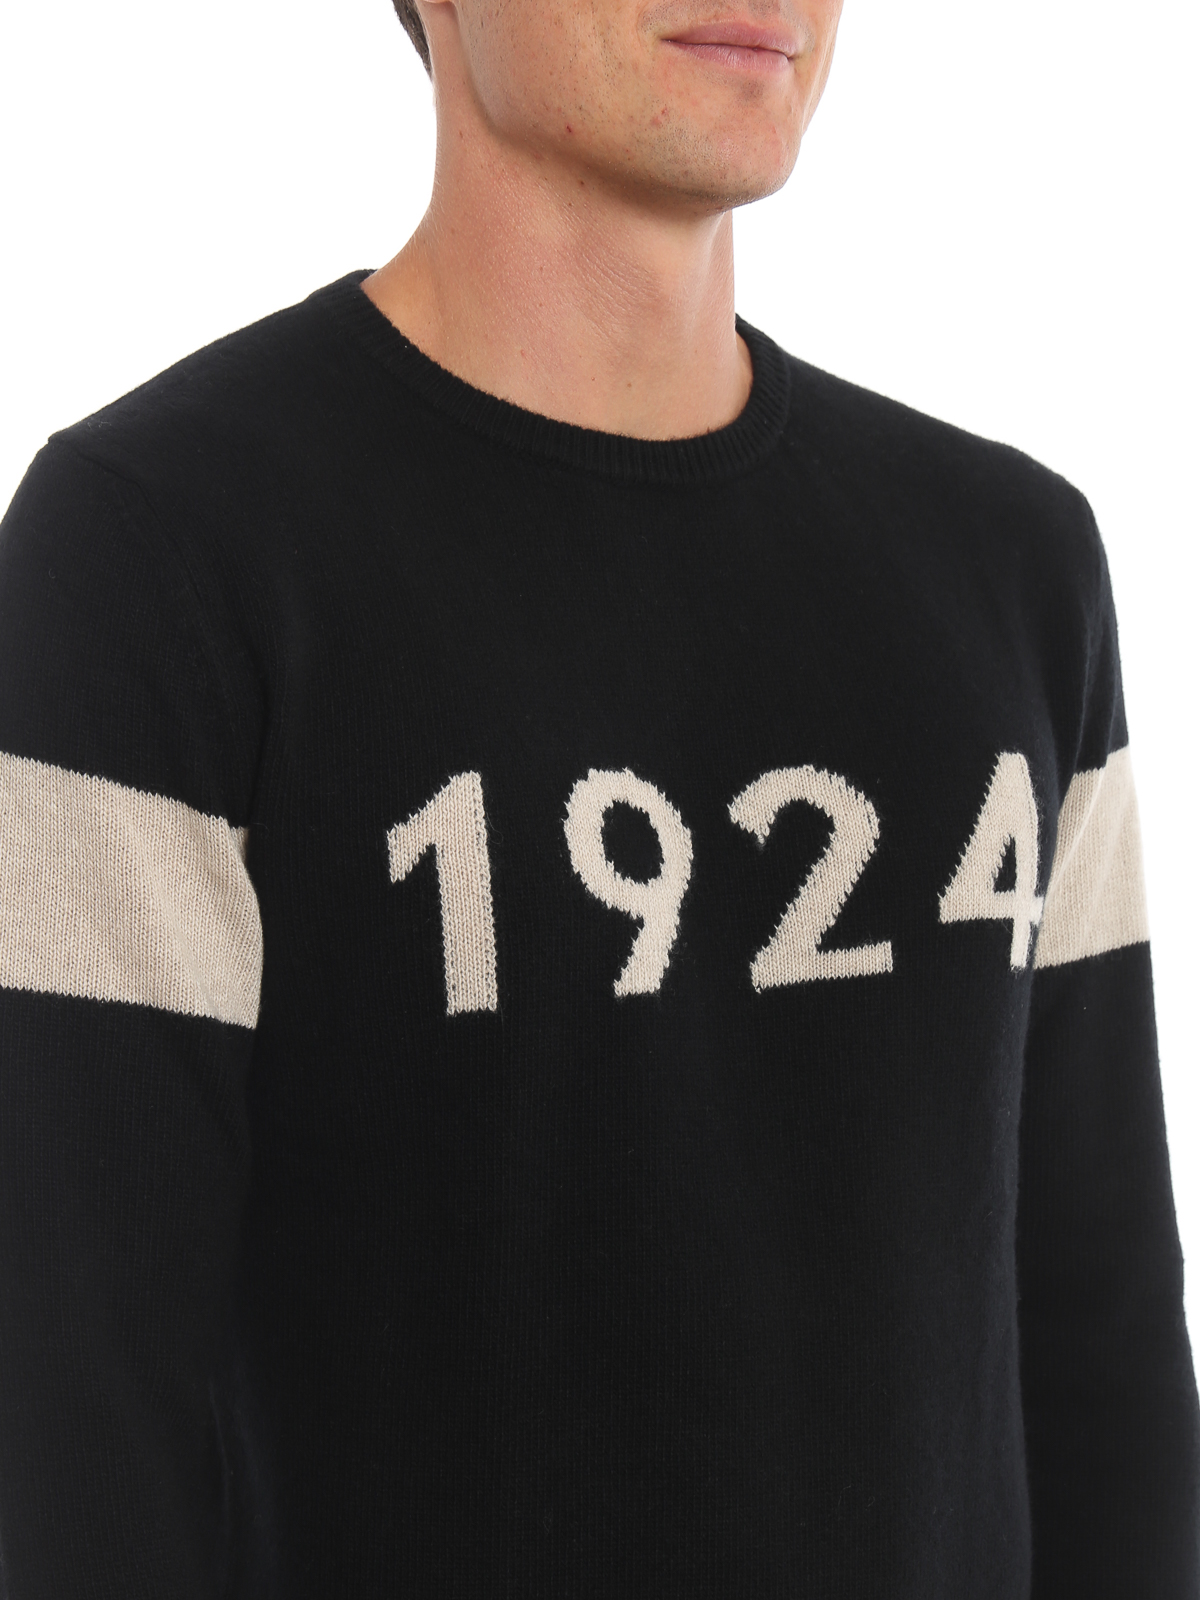 Crew necks Belstaff - 1924 intarsia cashmere blend sweater ...